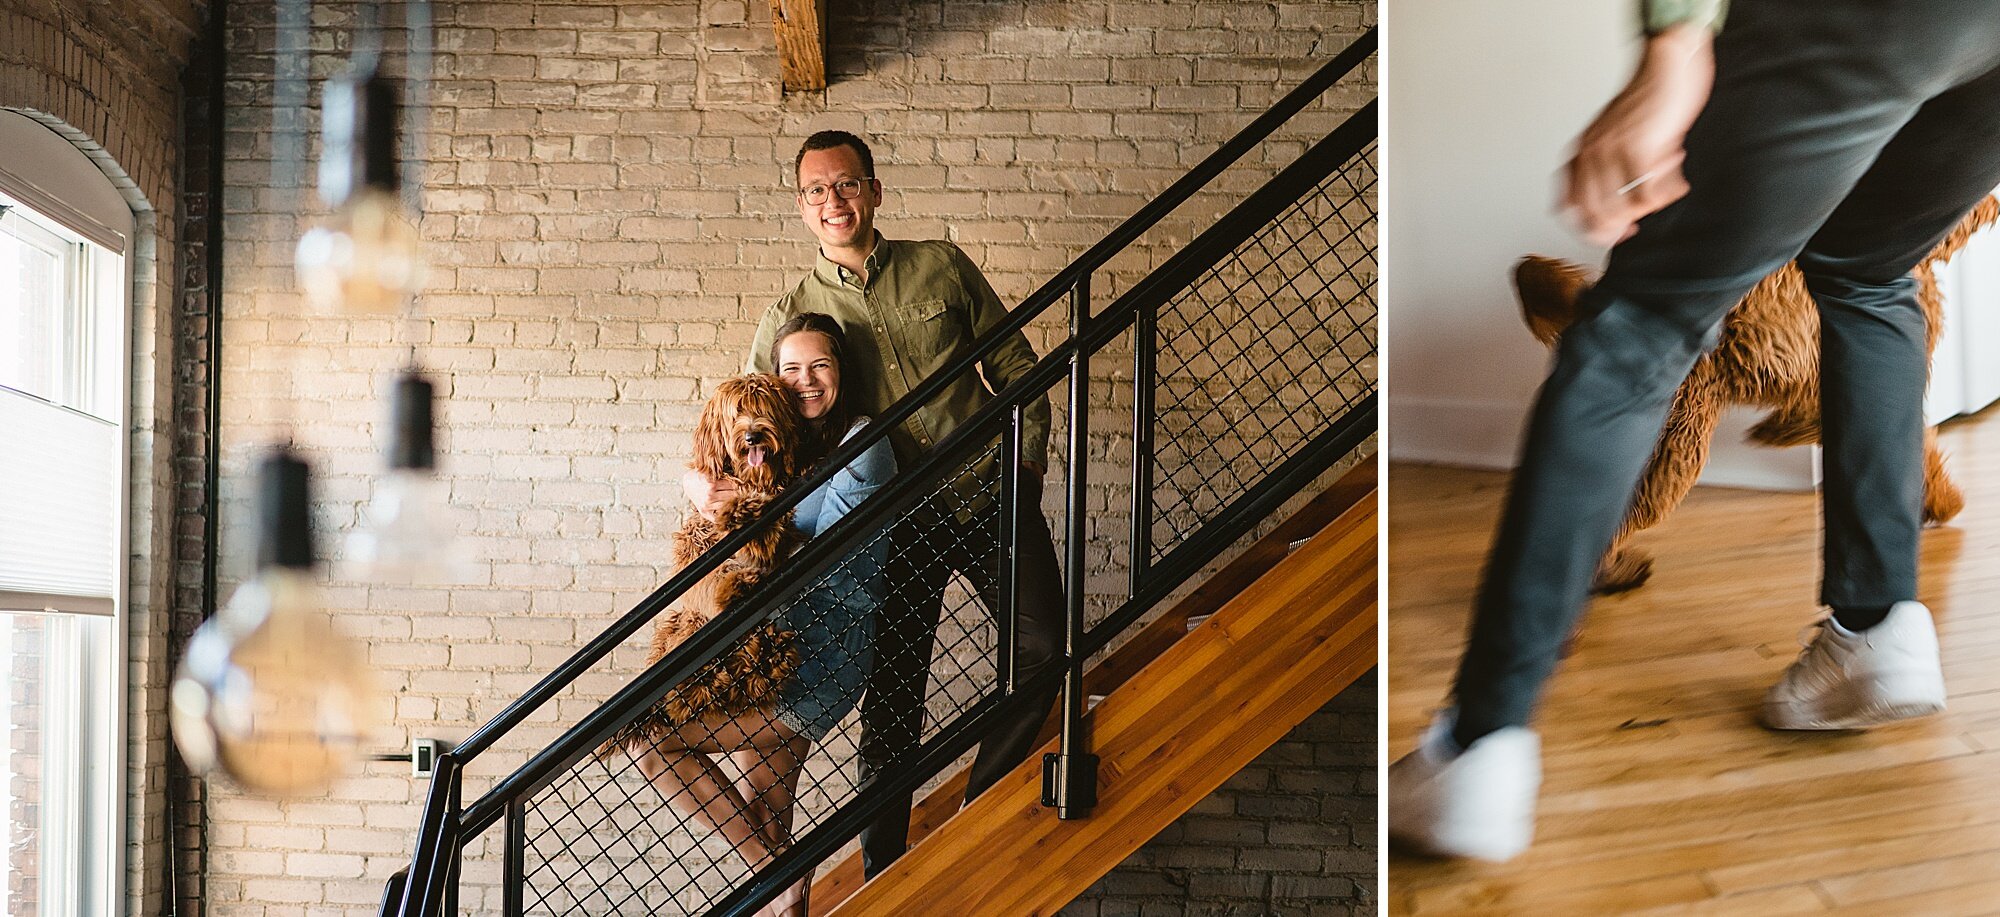 Grand Rapids Pet Photography - Couples portraits by Ryan Inman 2.jpg